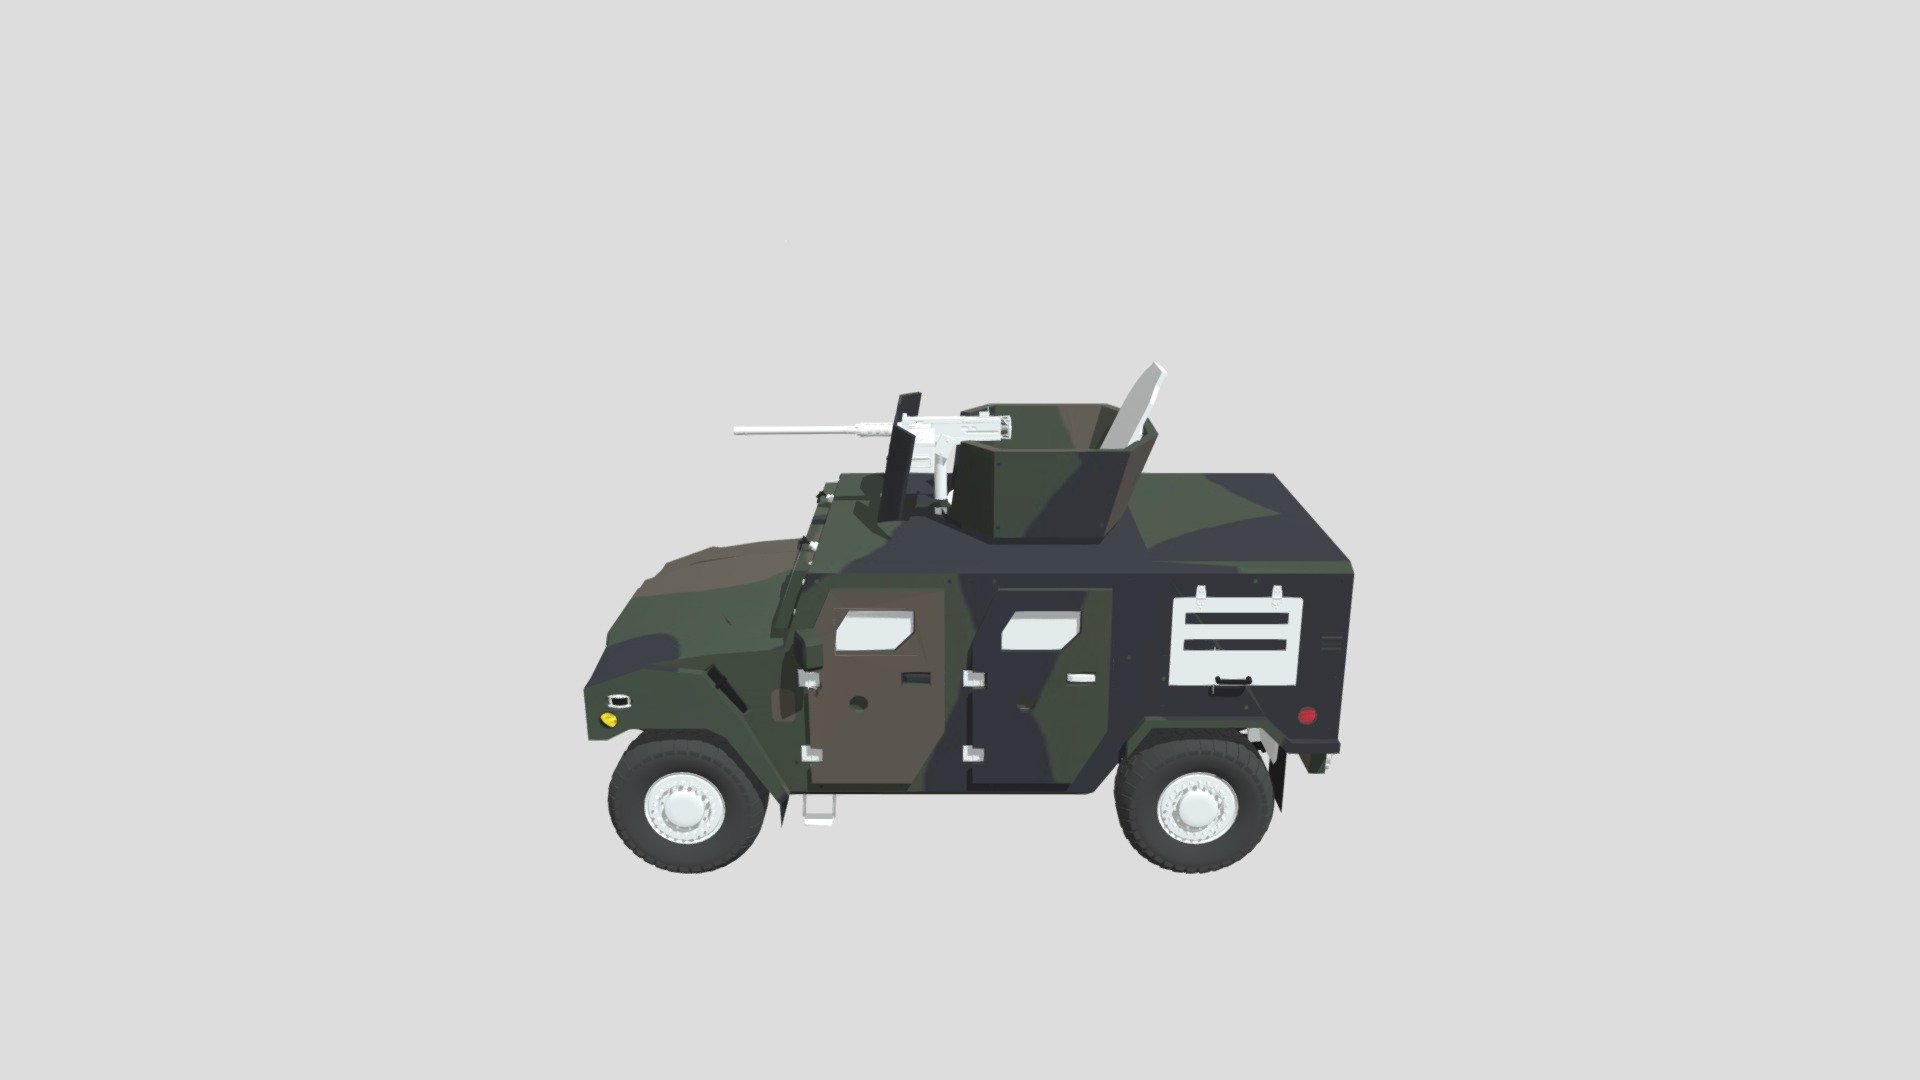 Light Tactical Vehicle, Light Utility Vehicle, Light Activity Vehicle, Light All-Terrain Vehicle

south korea Light Tactical Vehicle k-151

K151, K-151 is south korea humvee - K-151 - 3D model by hohorang 3d model